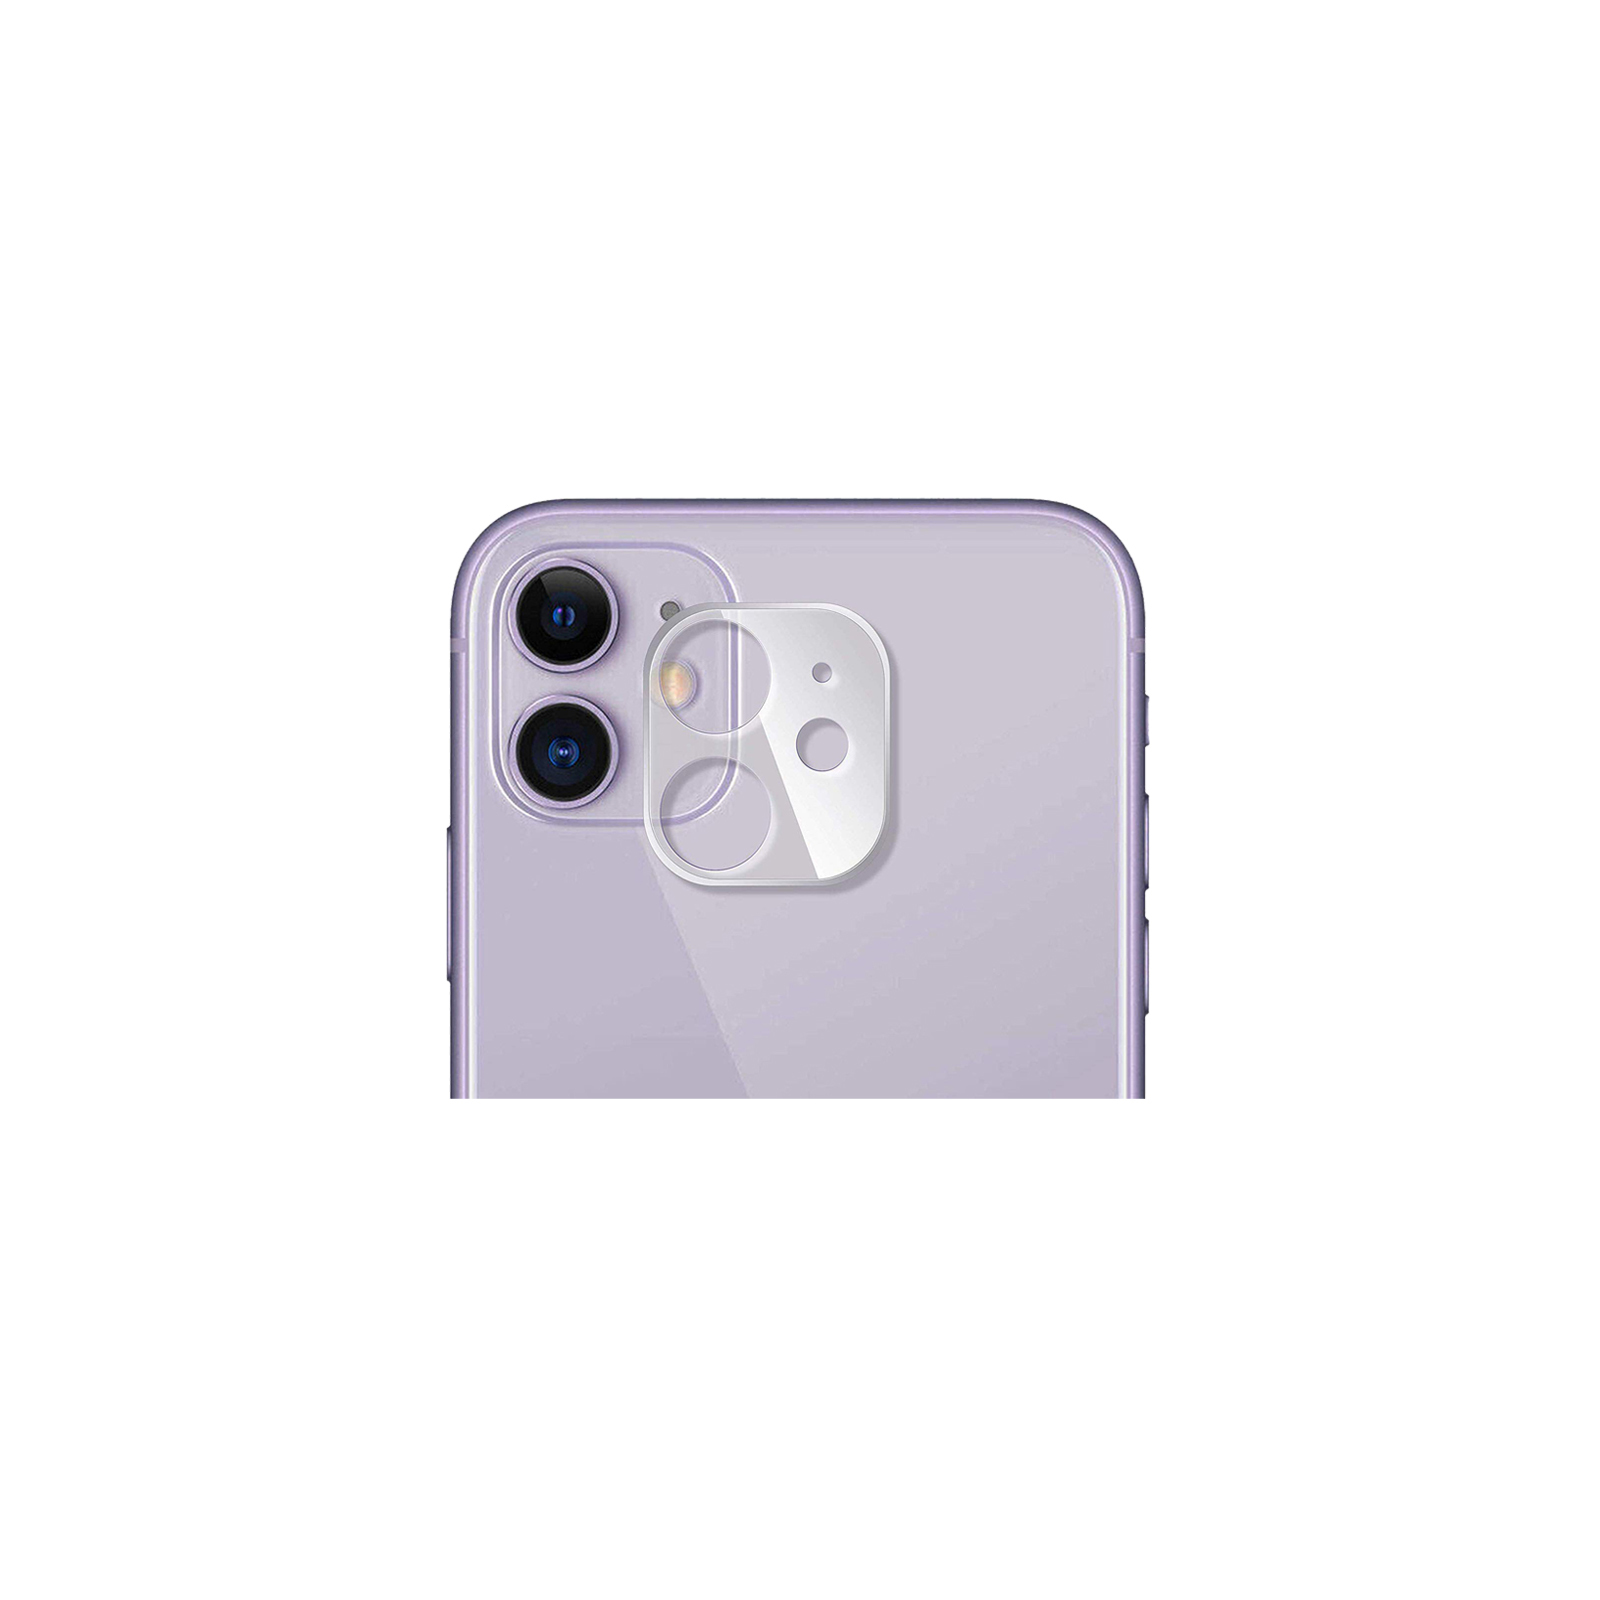 Kinglas iPhone 11 Lens Protector [Brand New]